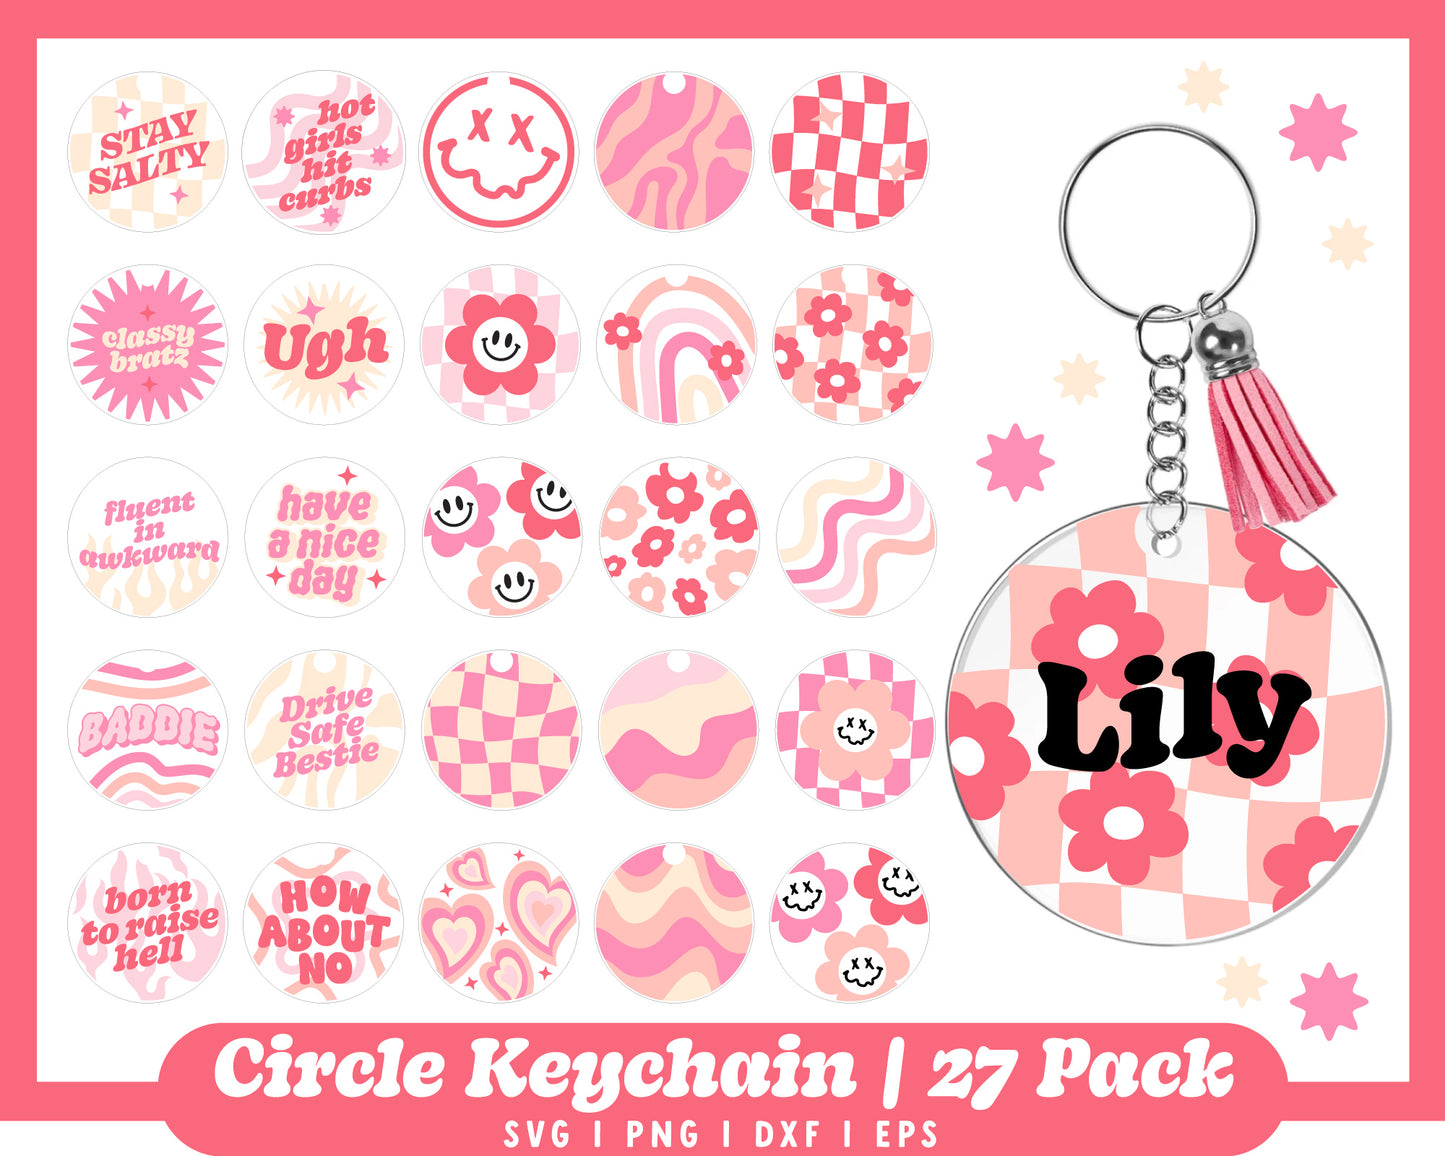 Circle Keychain SVG Bundle | 27 Pack